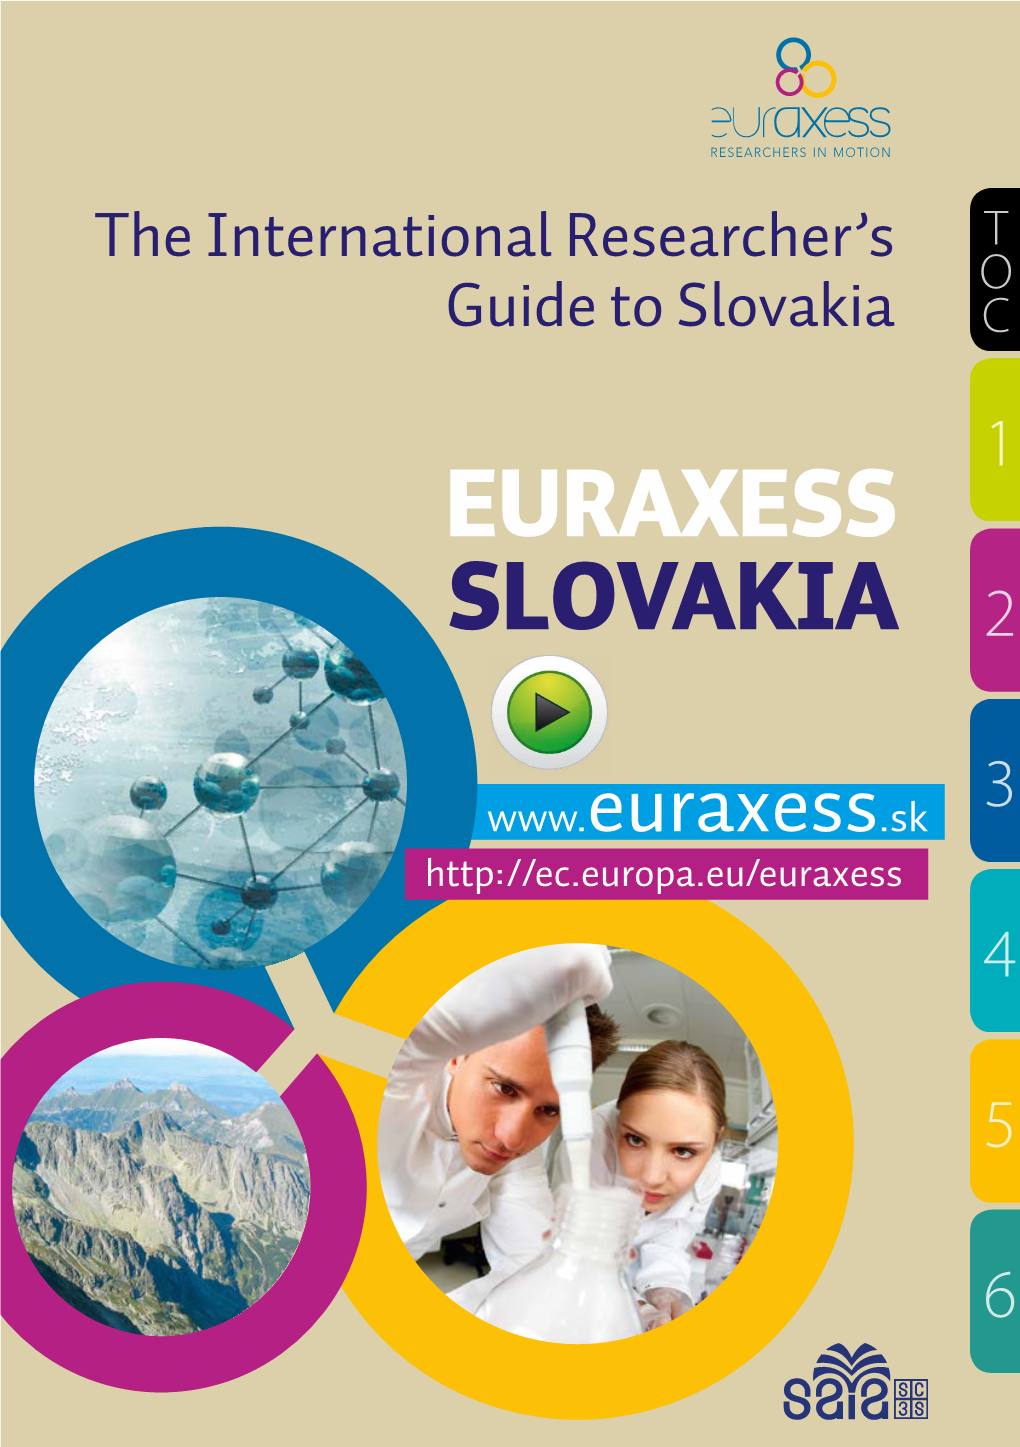 Euraxess Slovakia